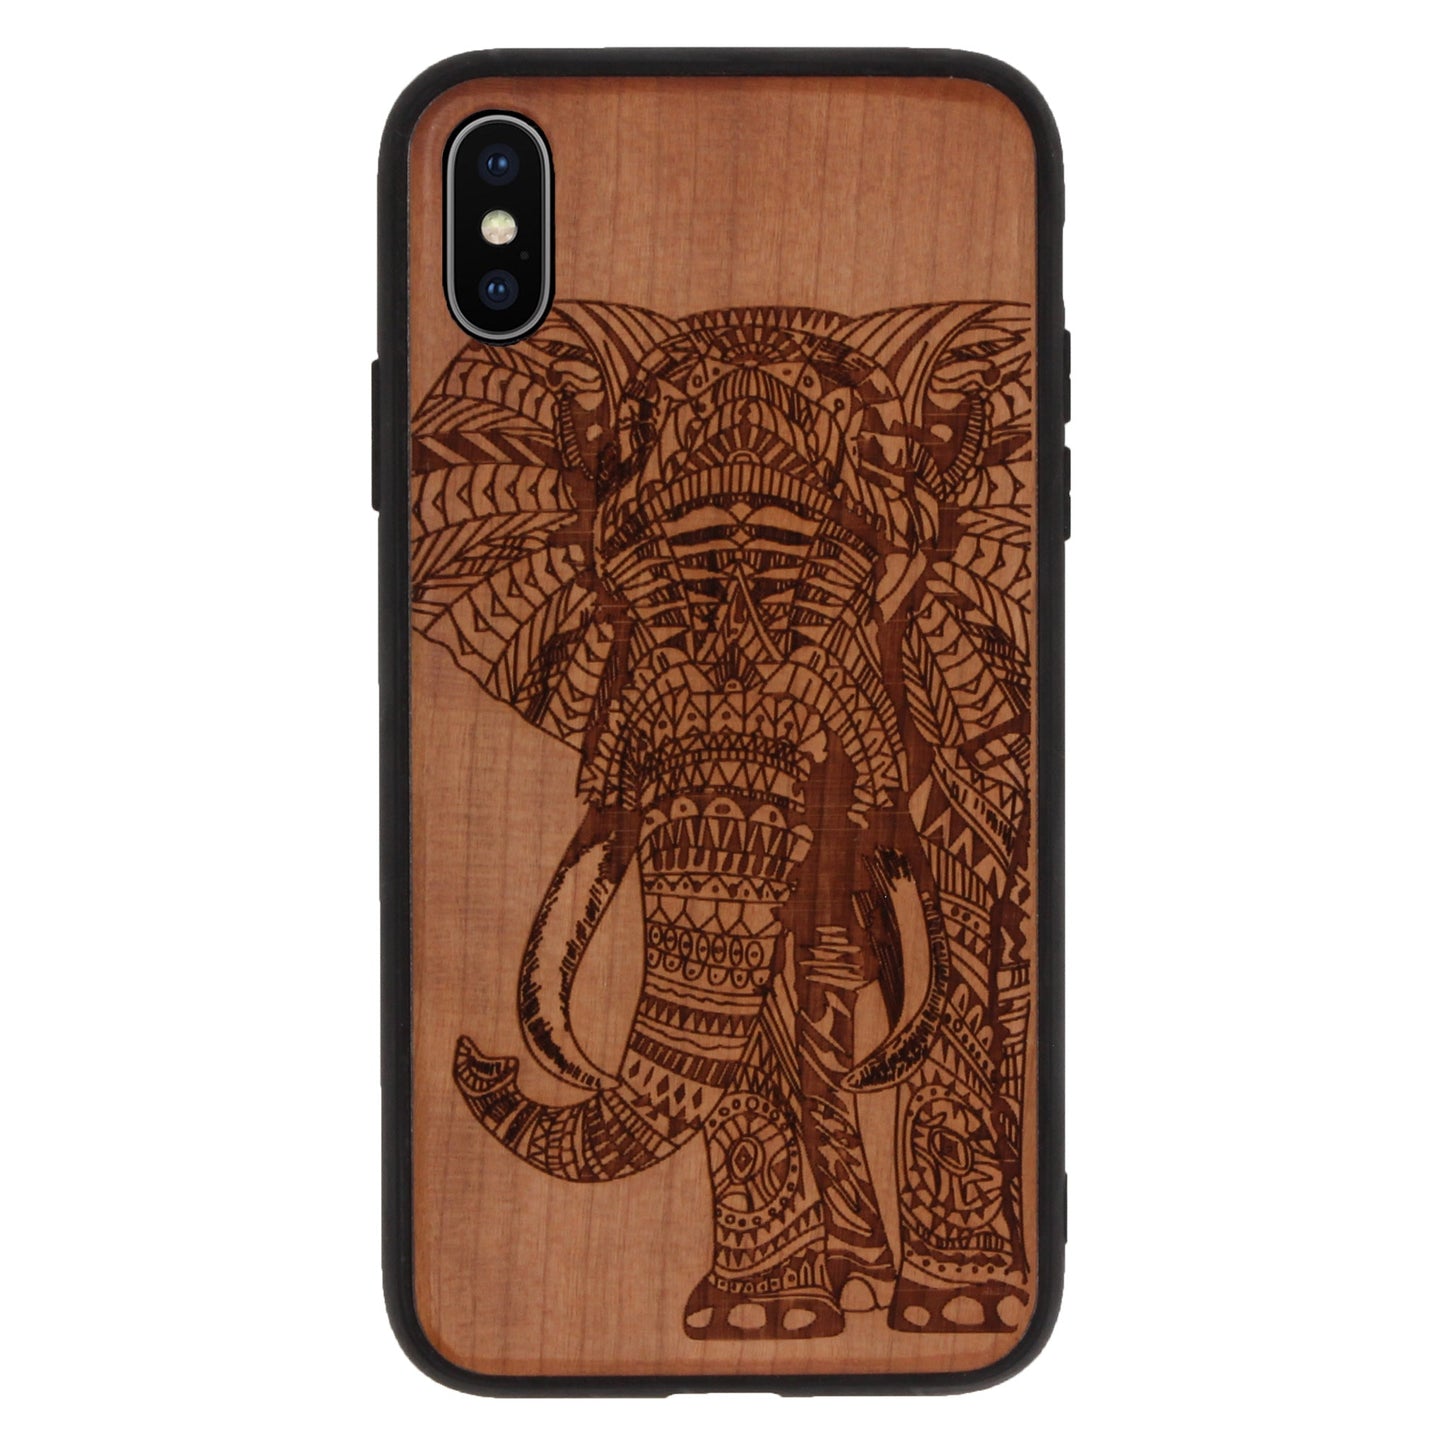 Elephant Eden case made of cherry wood